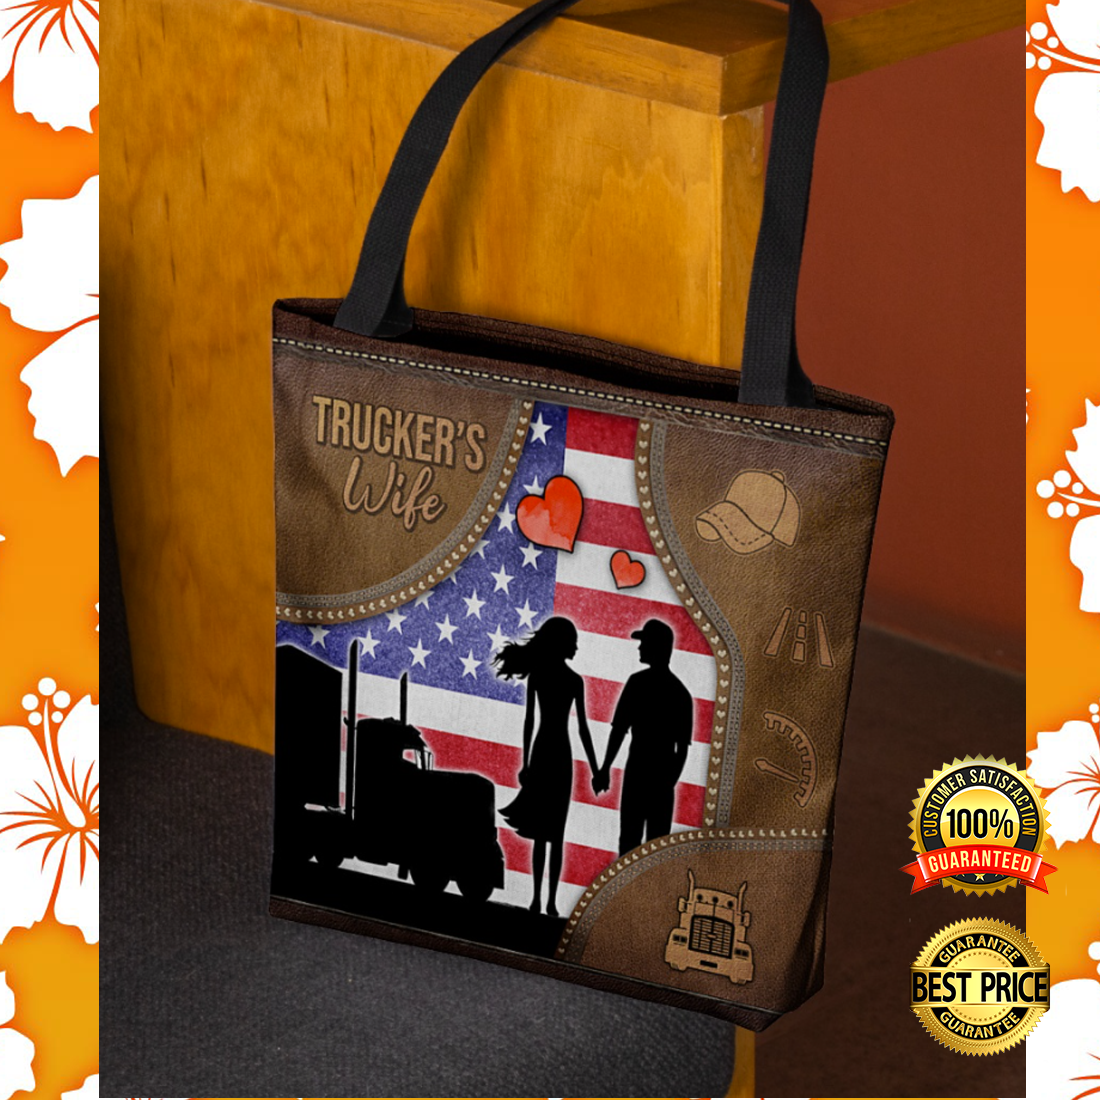 Trucker_s wife tote bag 5